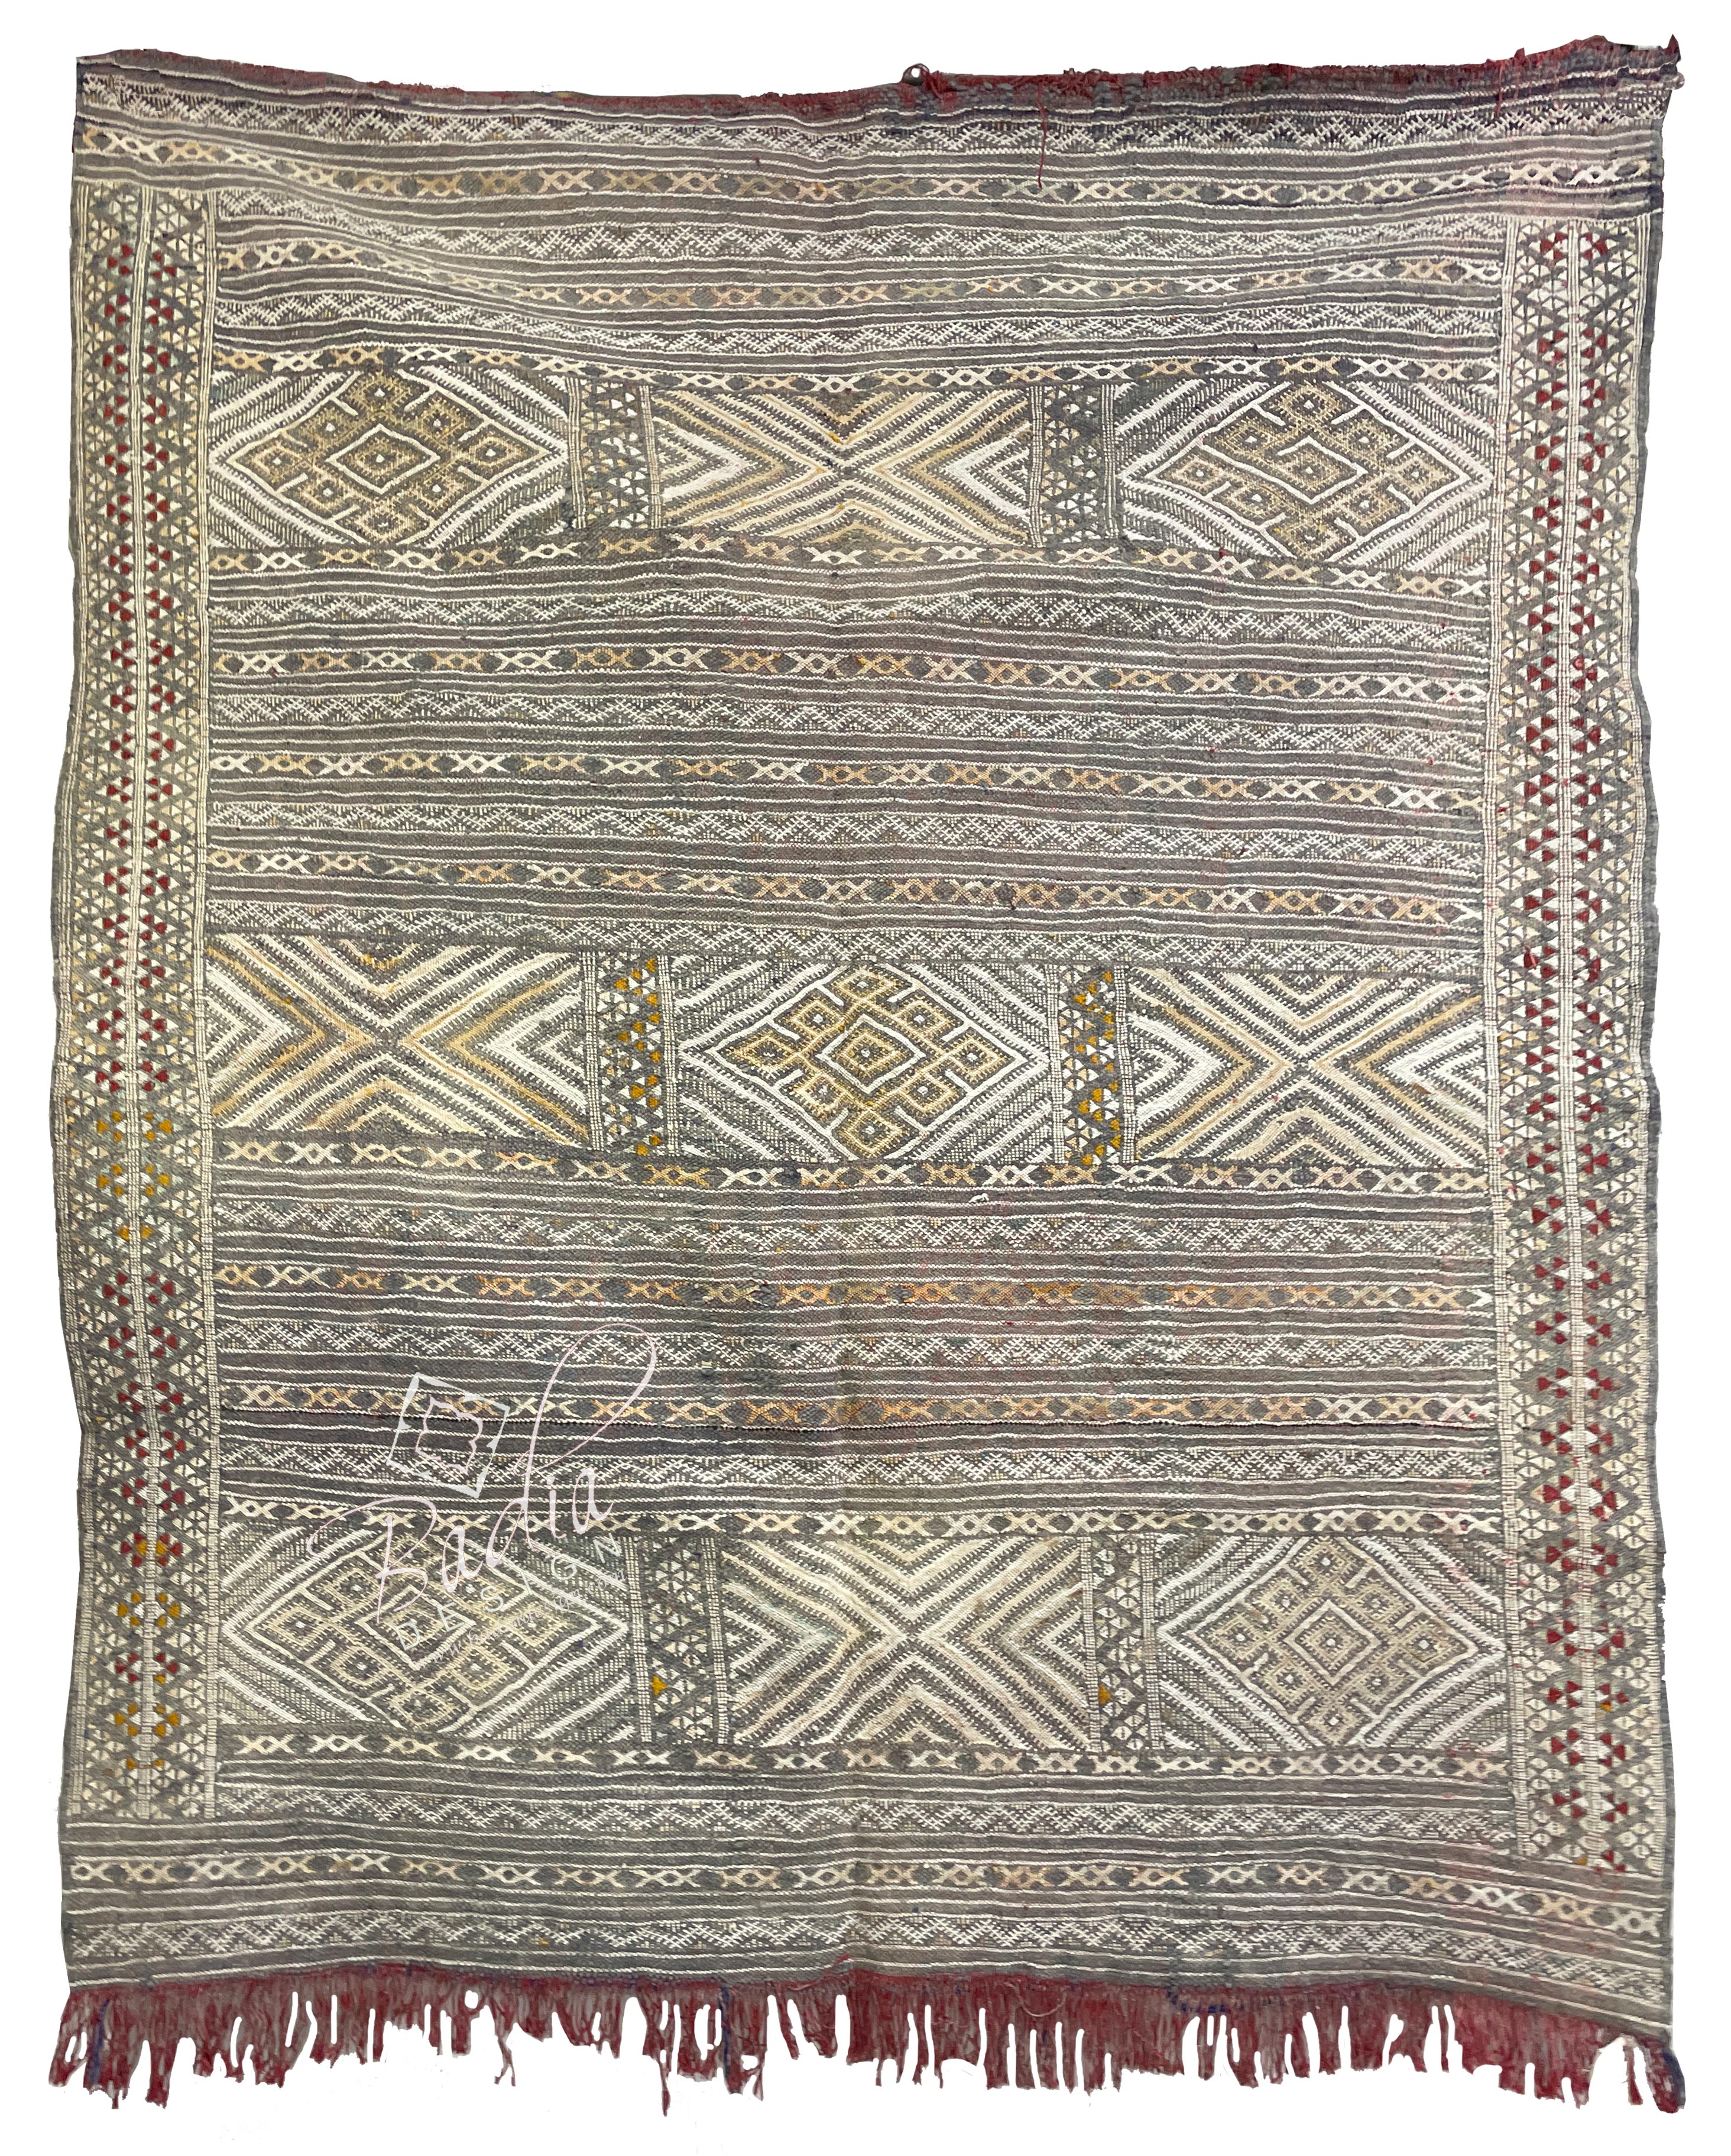 colorful-moroccan-kilim-rugs-selection-r0242.jpg